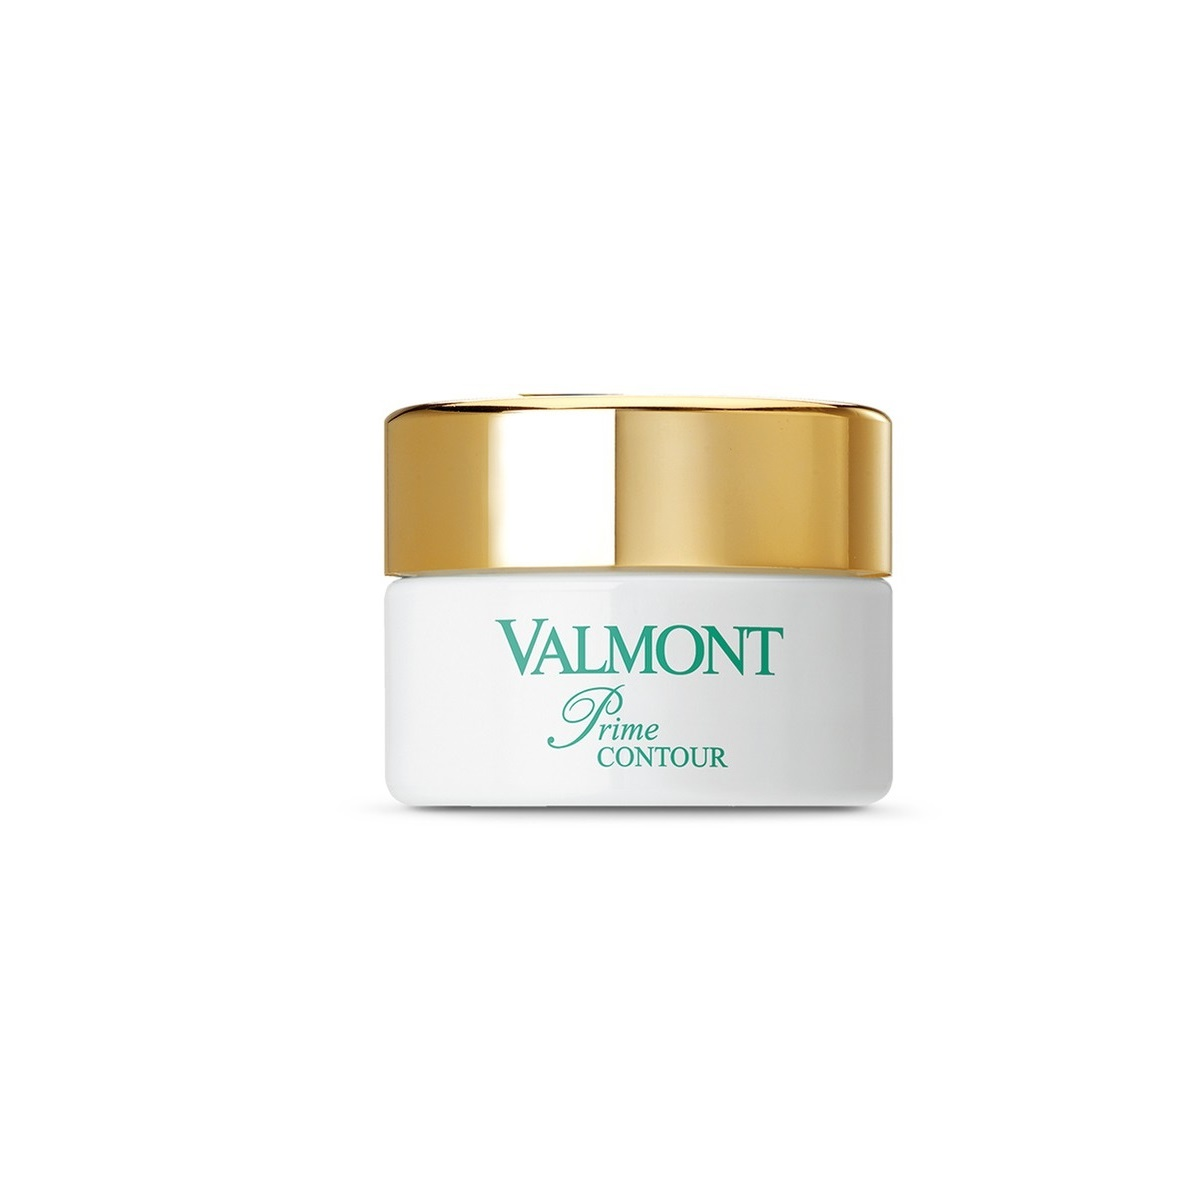 Valmont - Prime Contour (15ml)